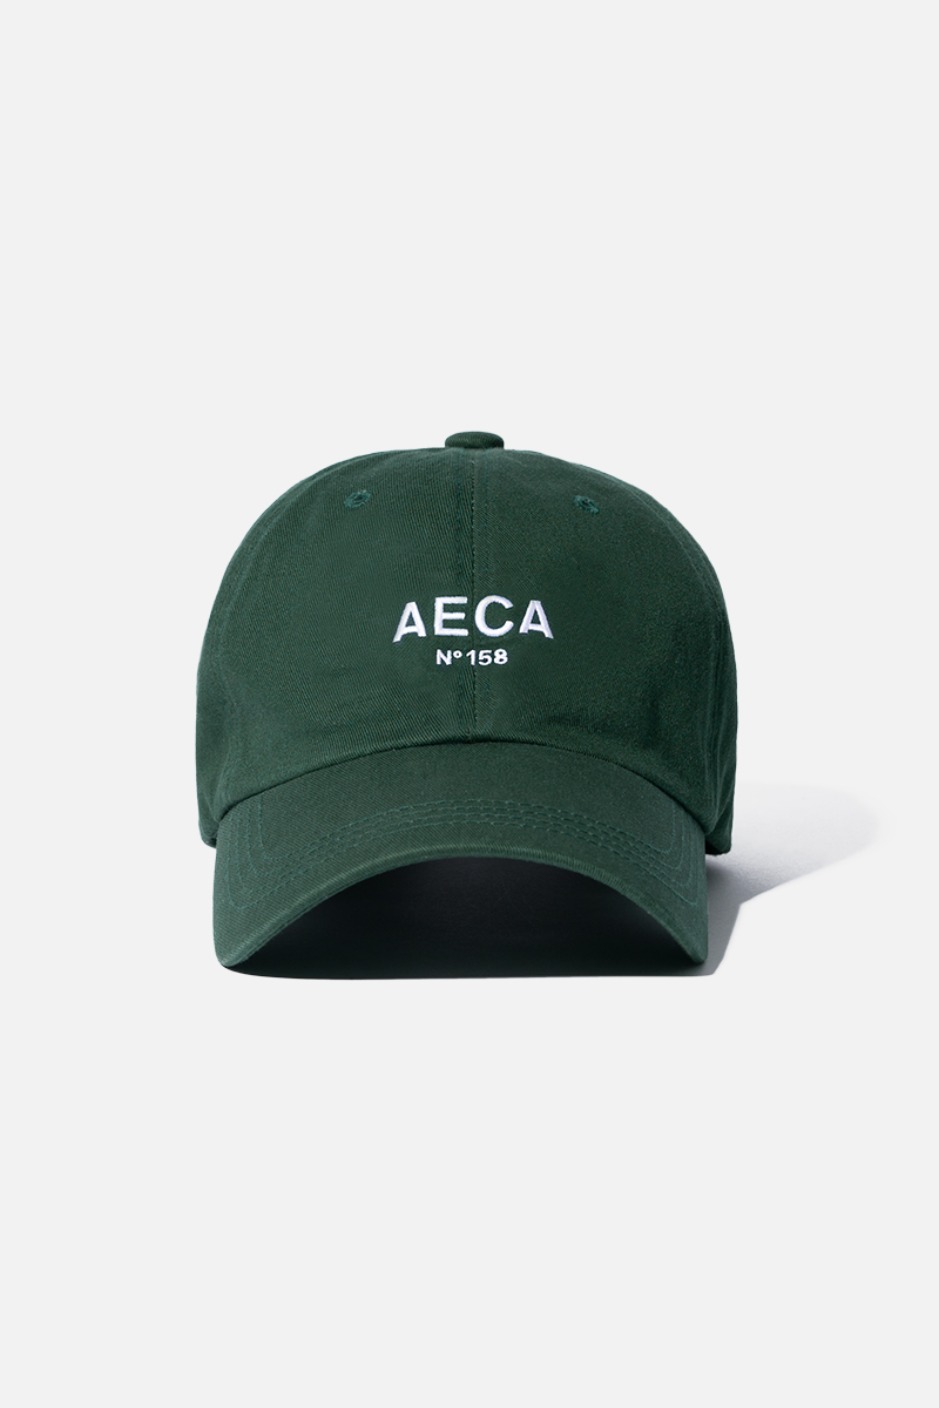 AECA LOGO CAP-GREEN